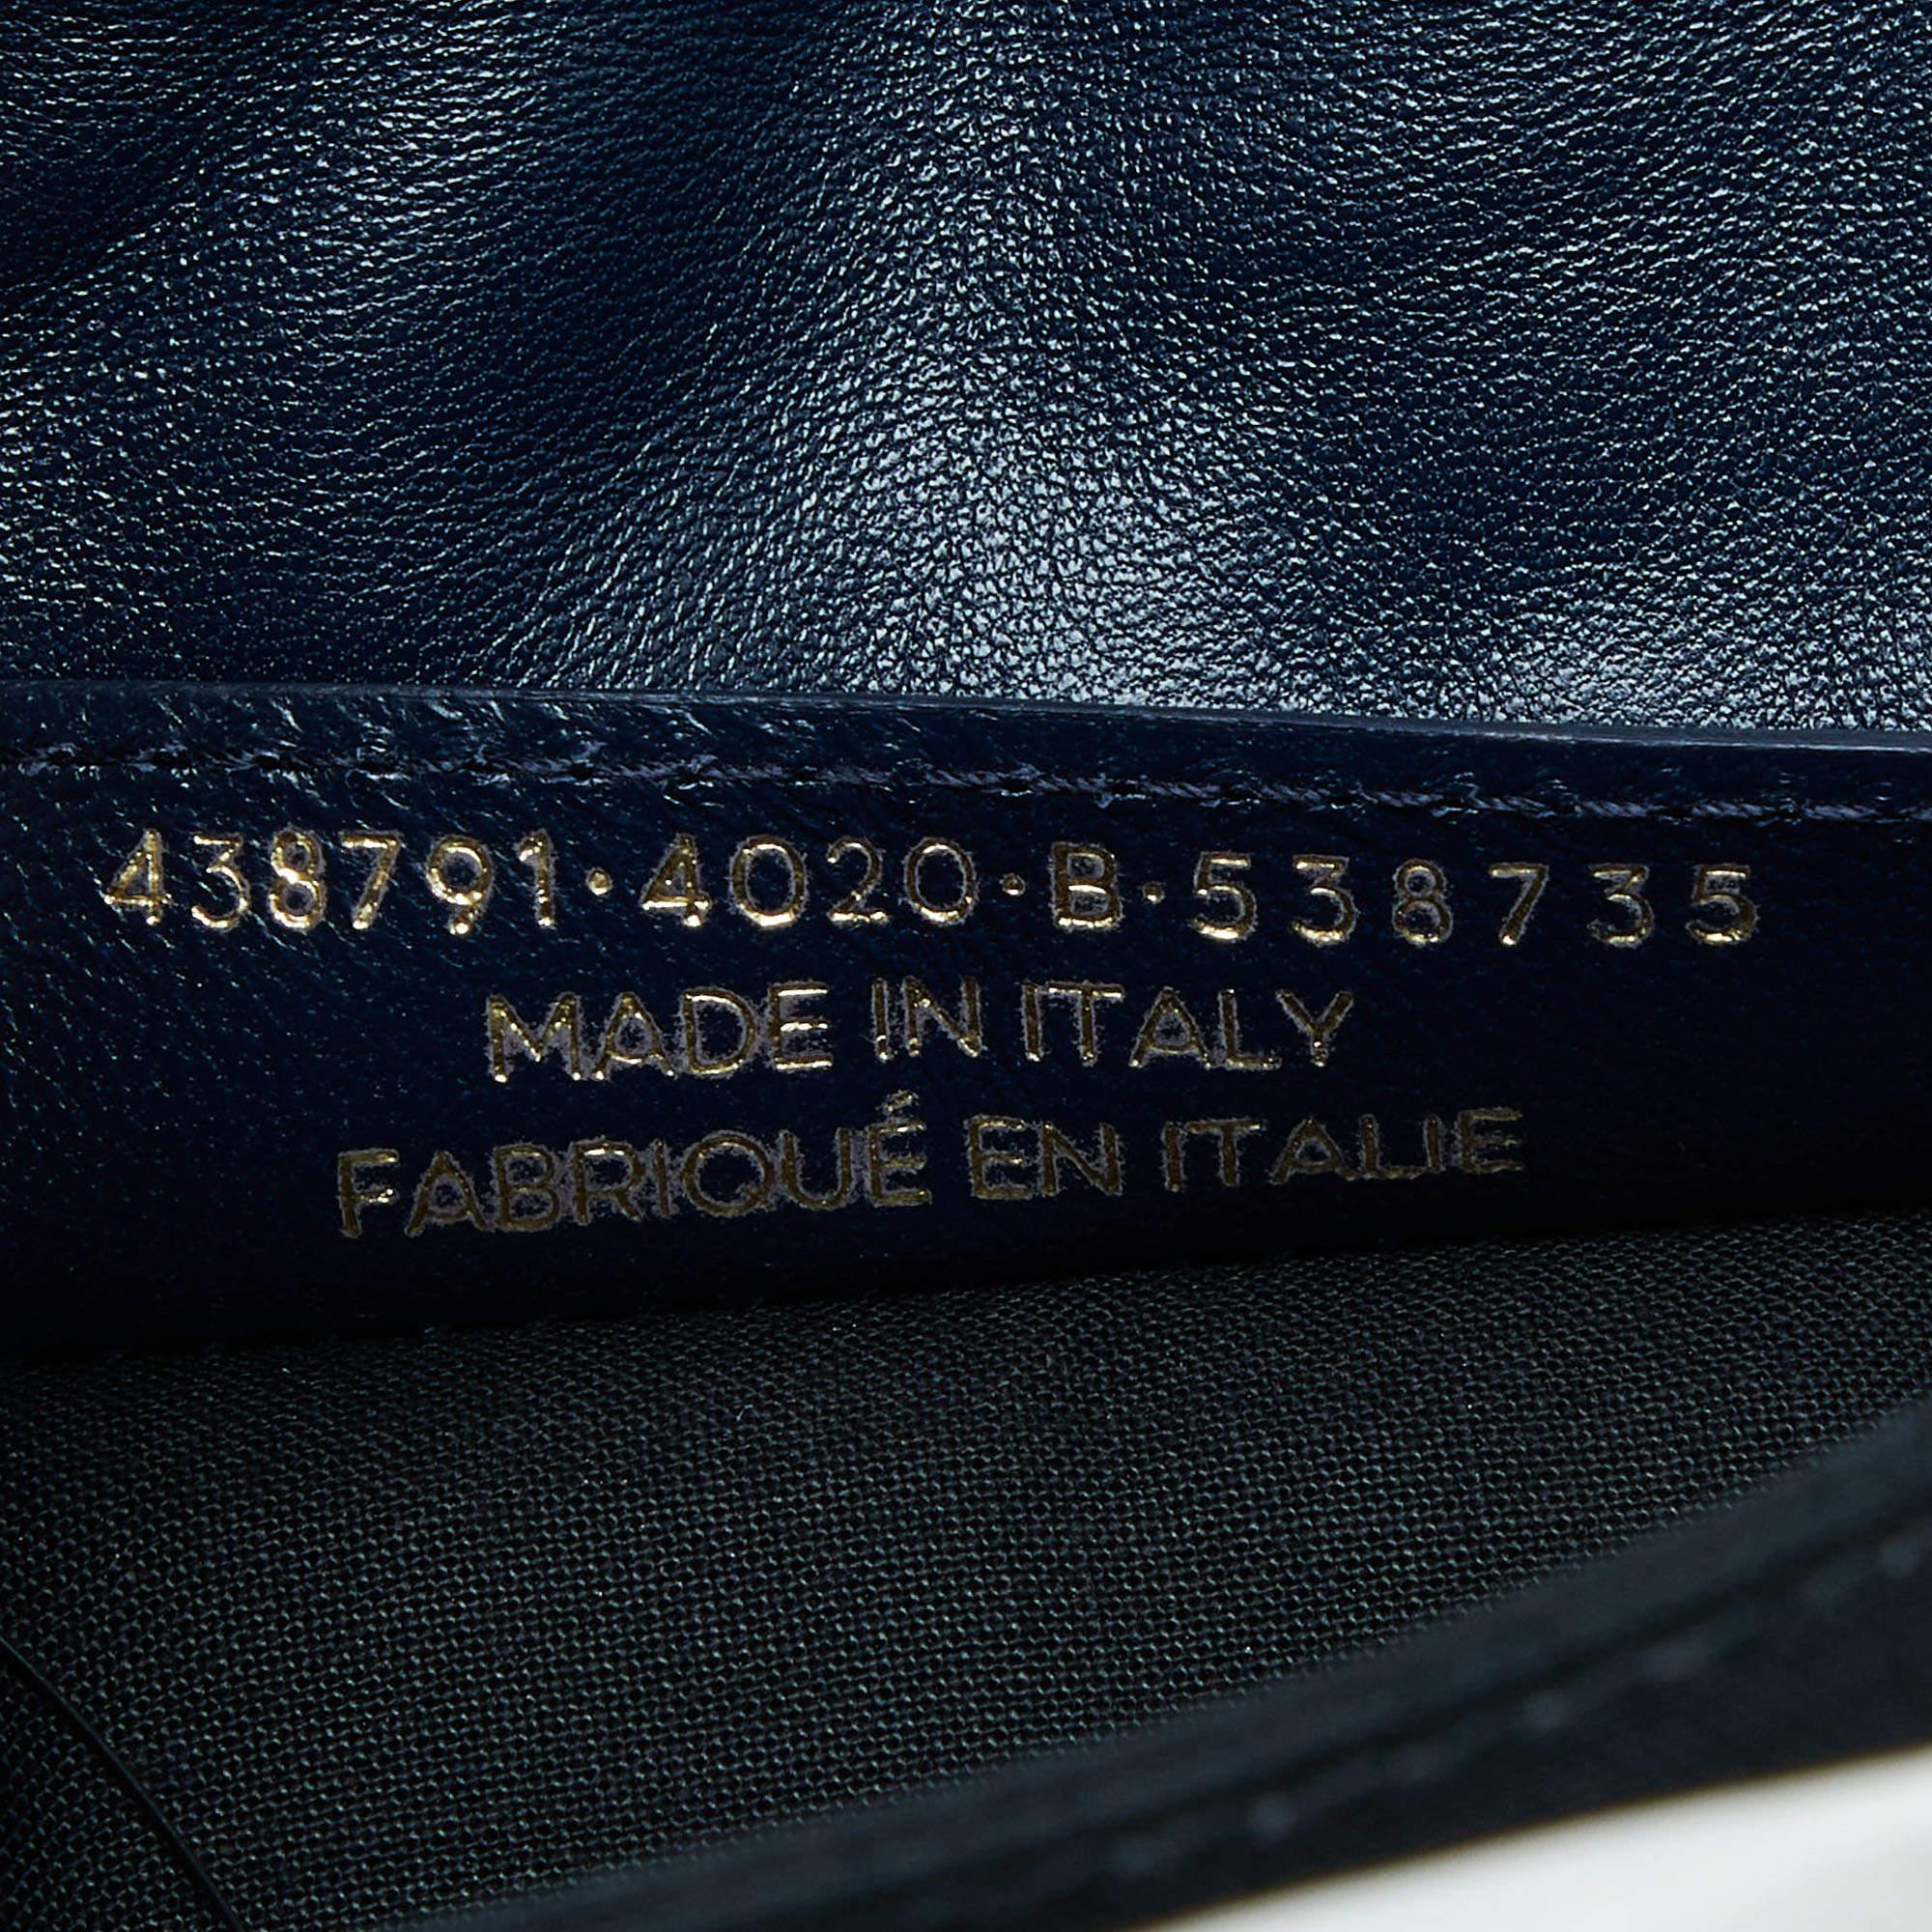 Balenciaga Navy Blue Leather Metallic Edge Envelope Clutch Bag 2